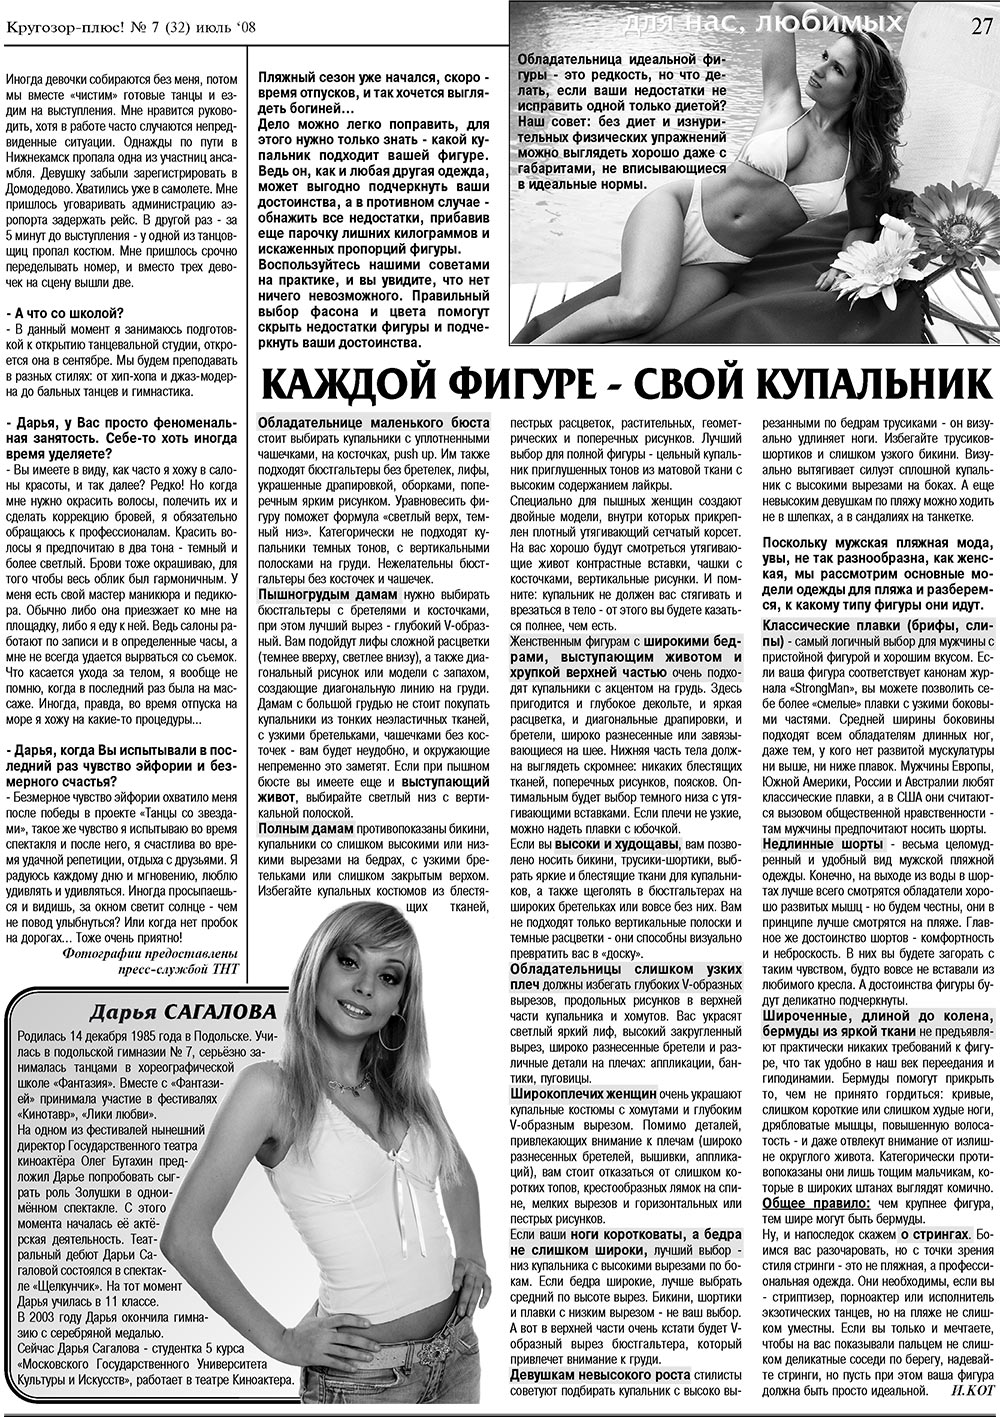 Кругозор плюс! (газета). 2008 год, номер 7, стр. 27